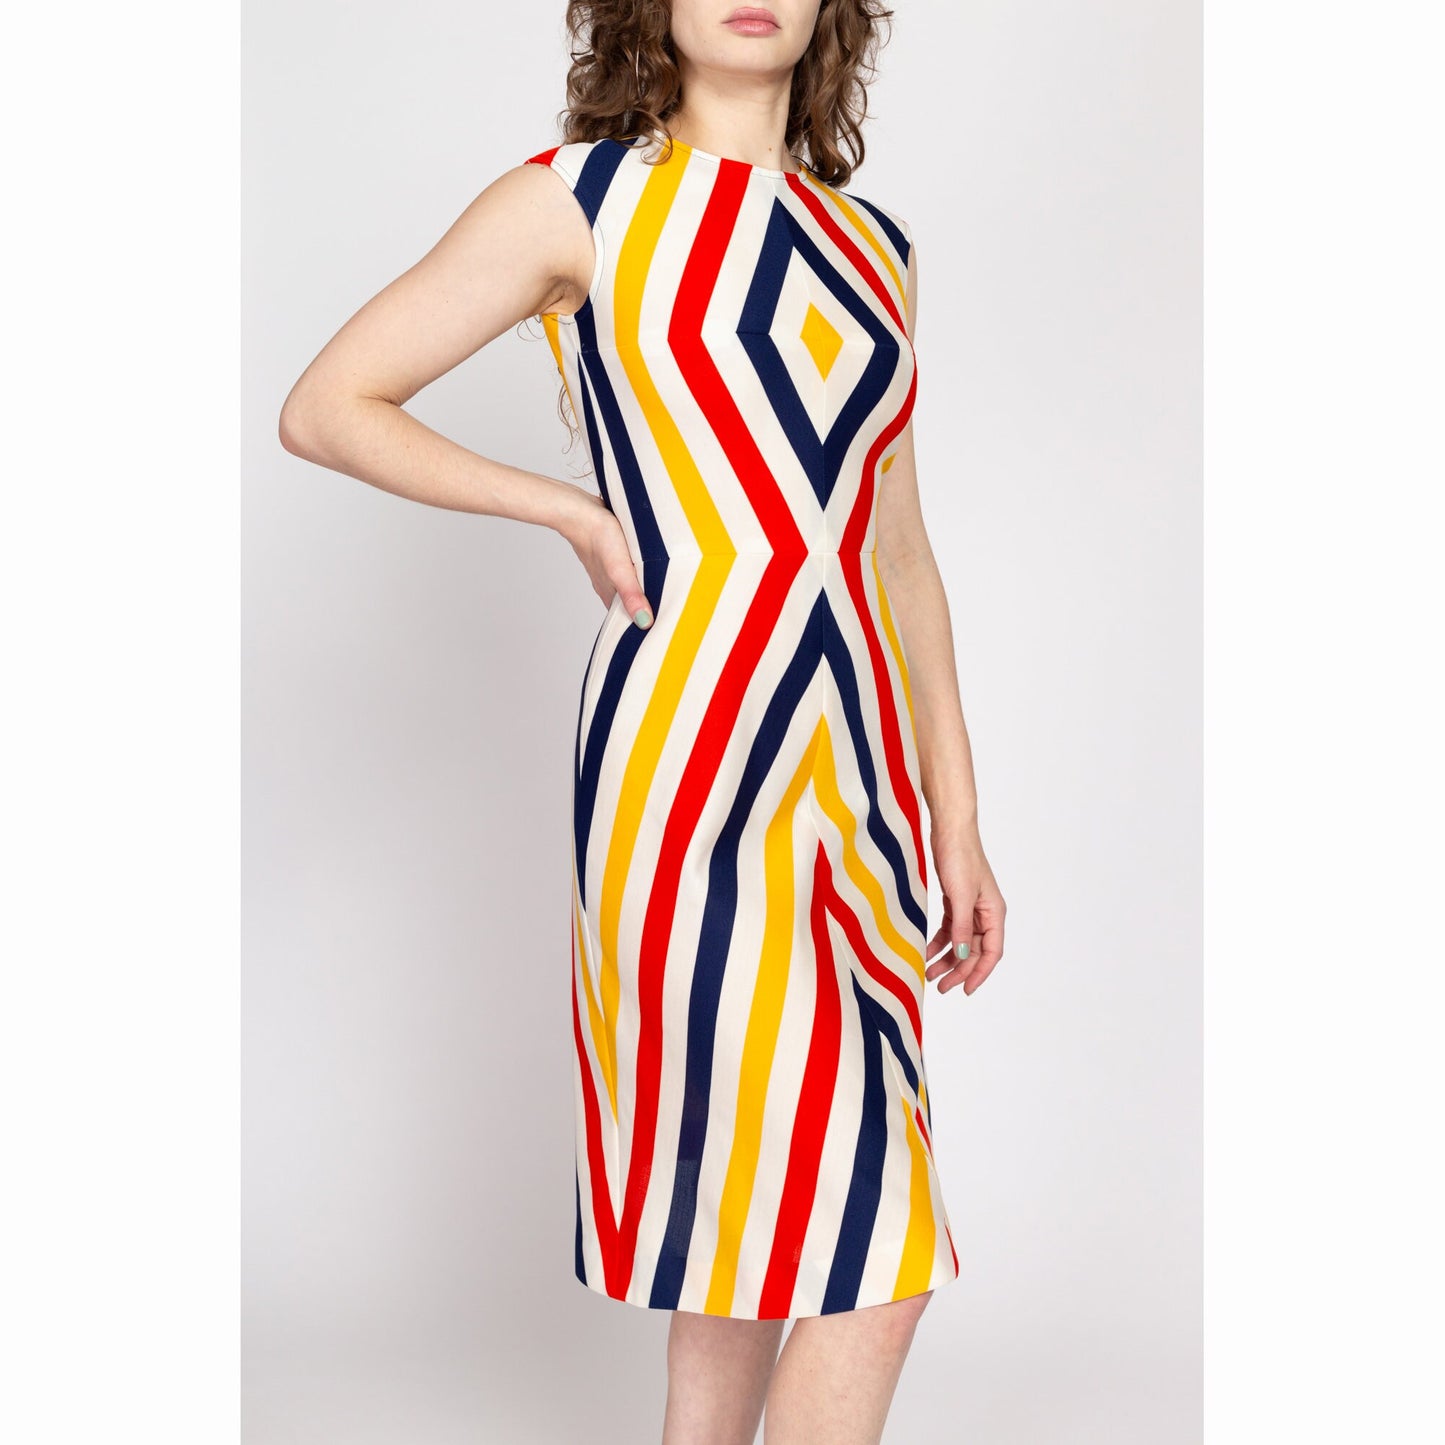 Small 70s Chevron Striped Midi Dress | Vintage Julie Miller Colorful A Line Retro Sleeveless Dress